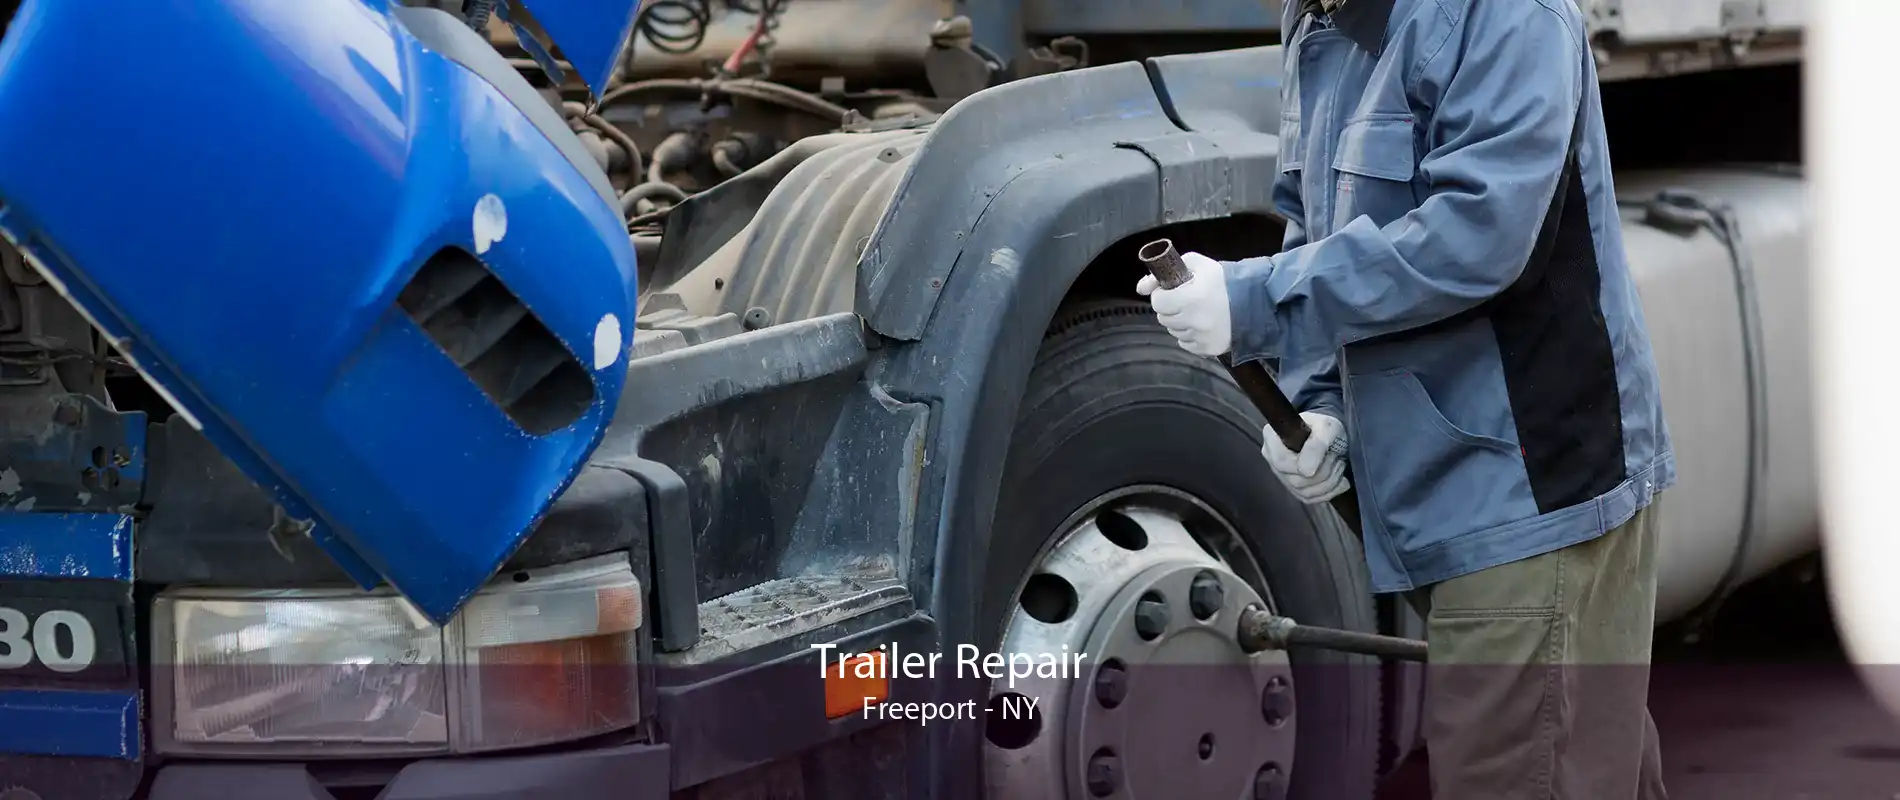 Trailer Repair Freeport - NY